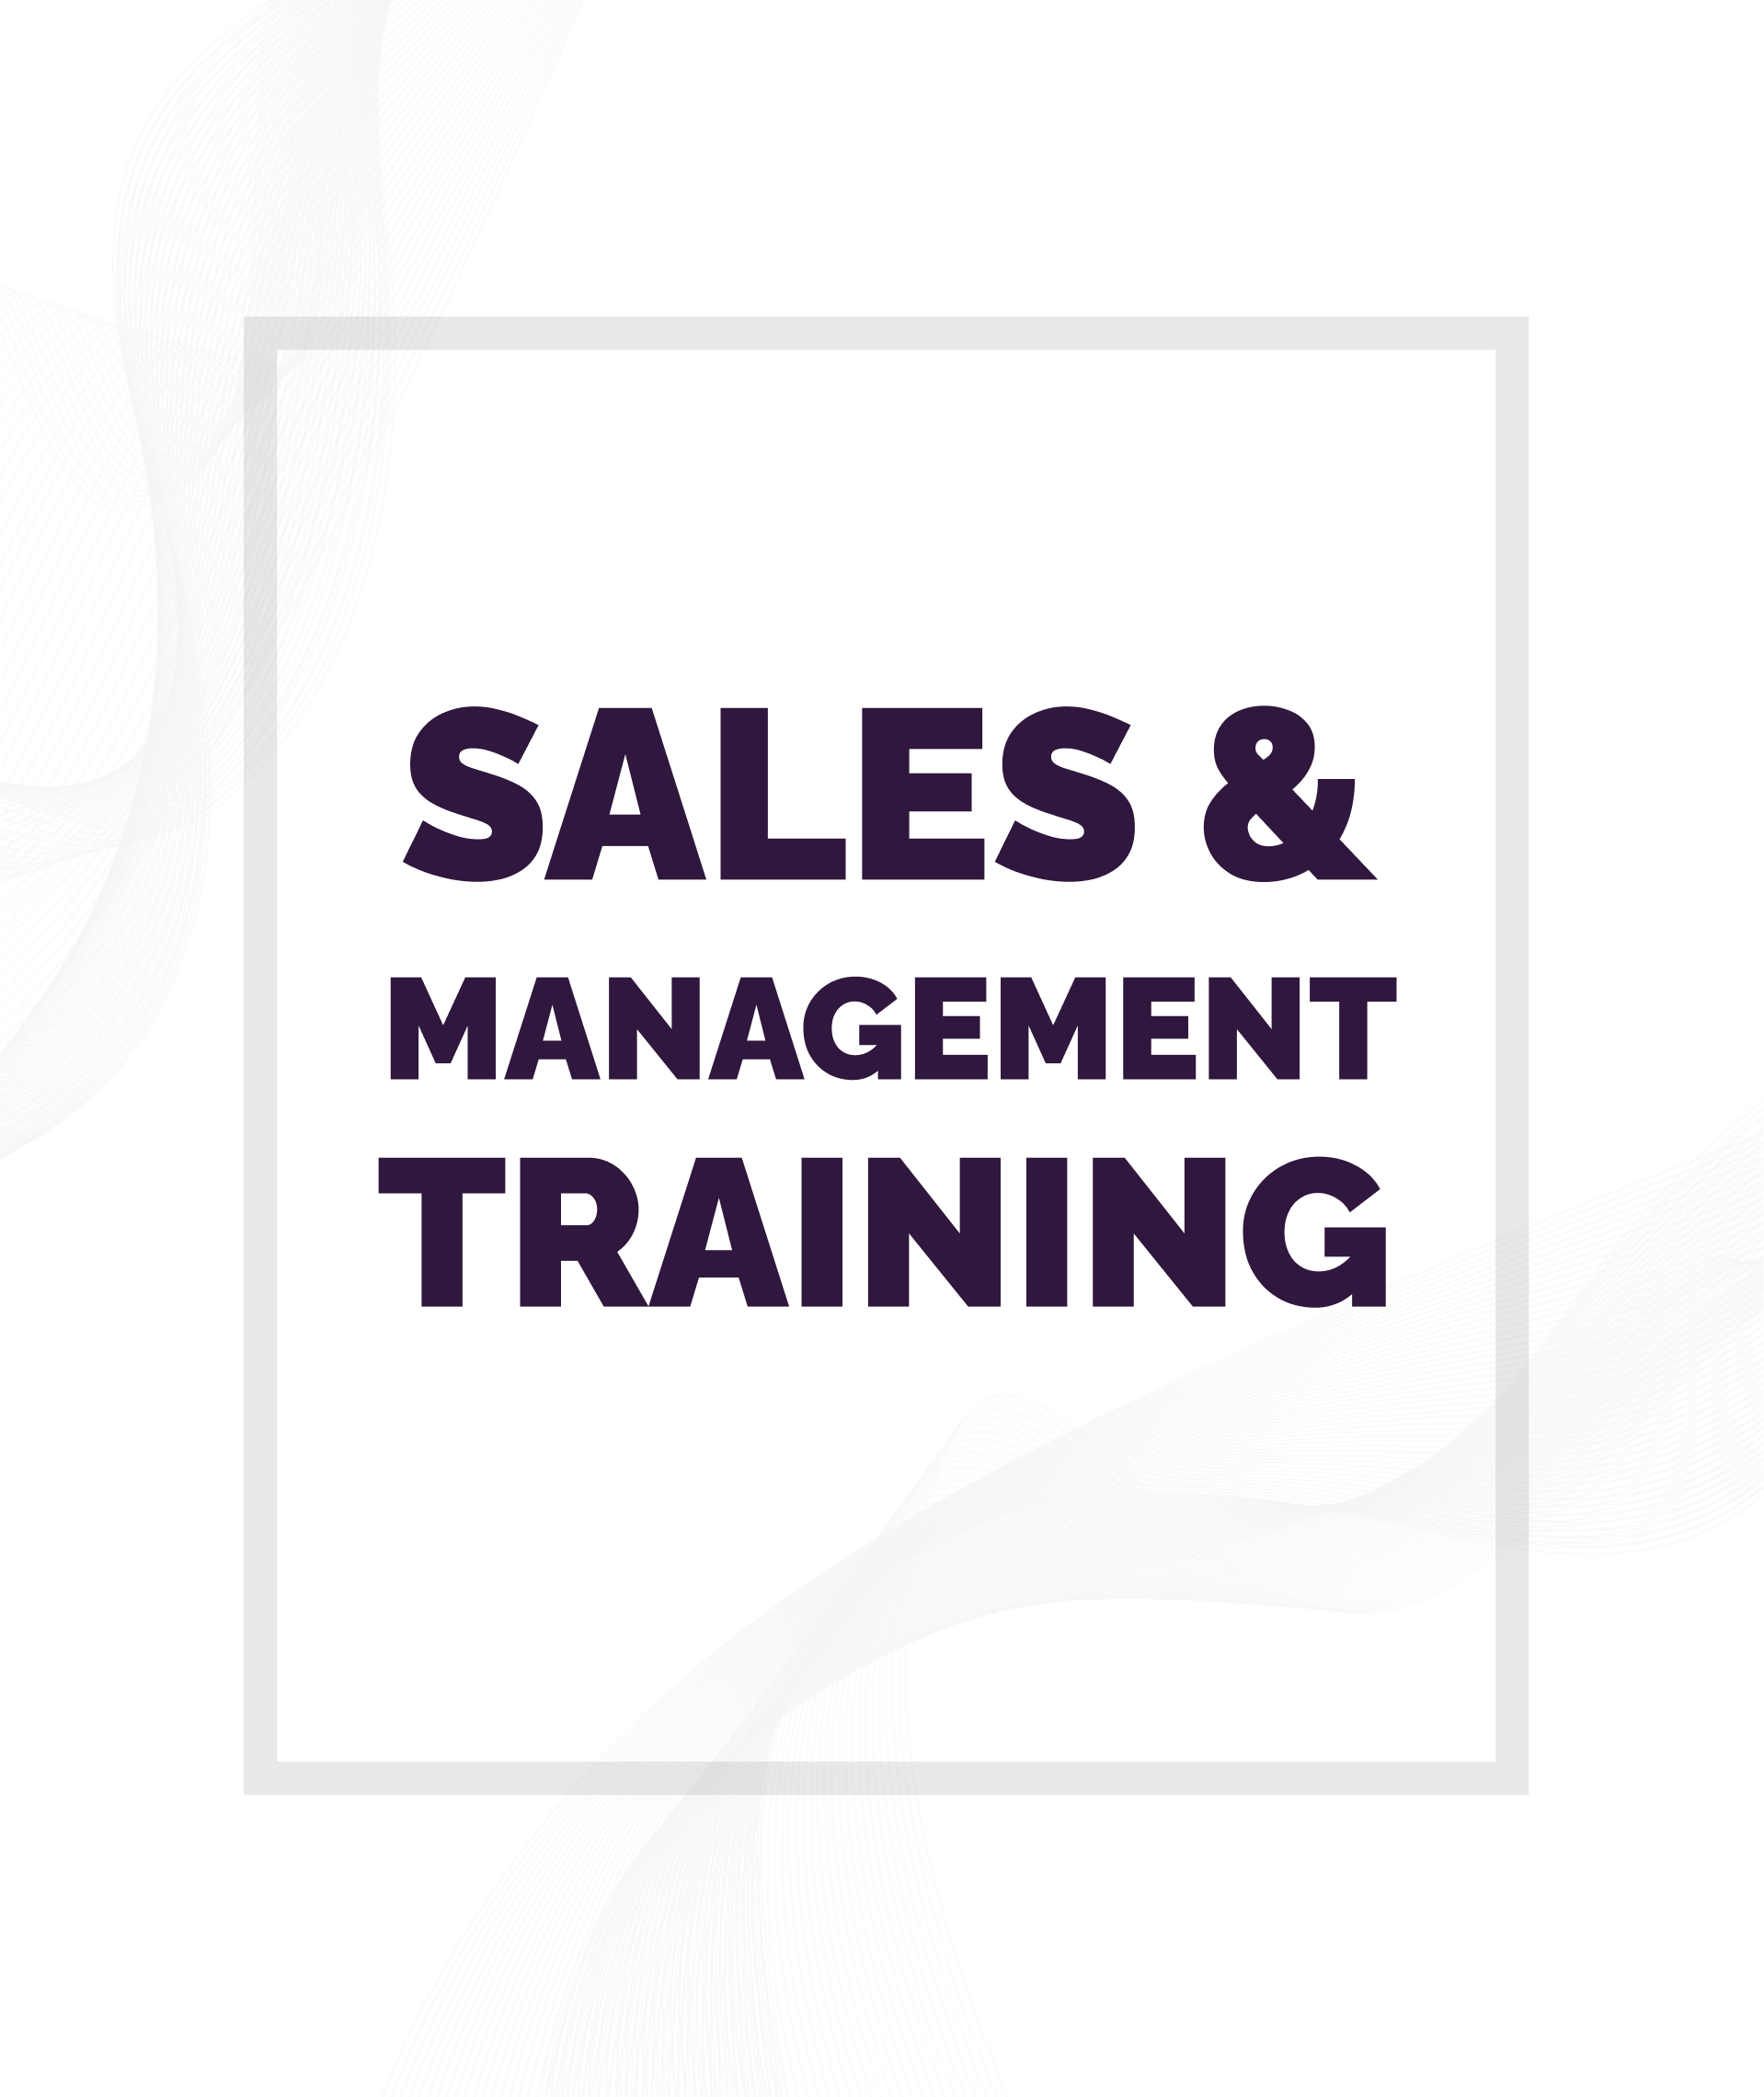 Sales & management training